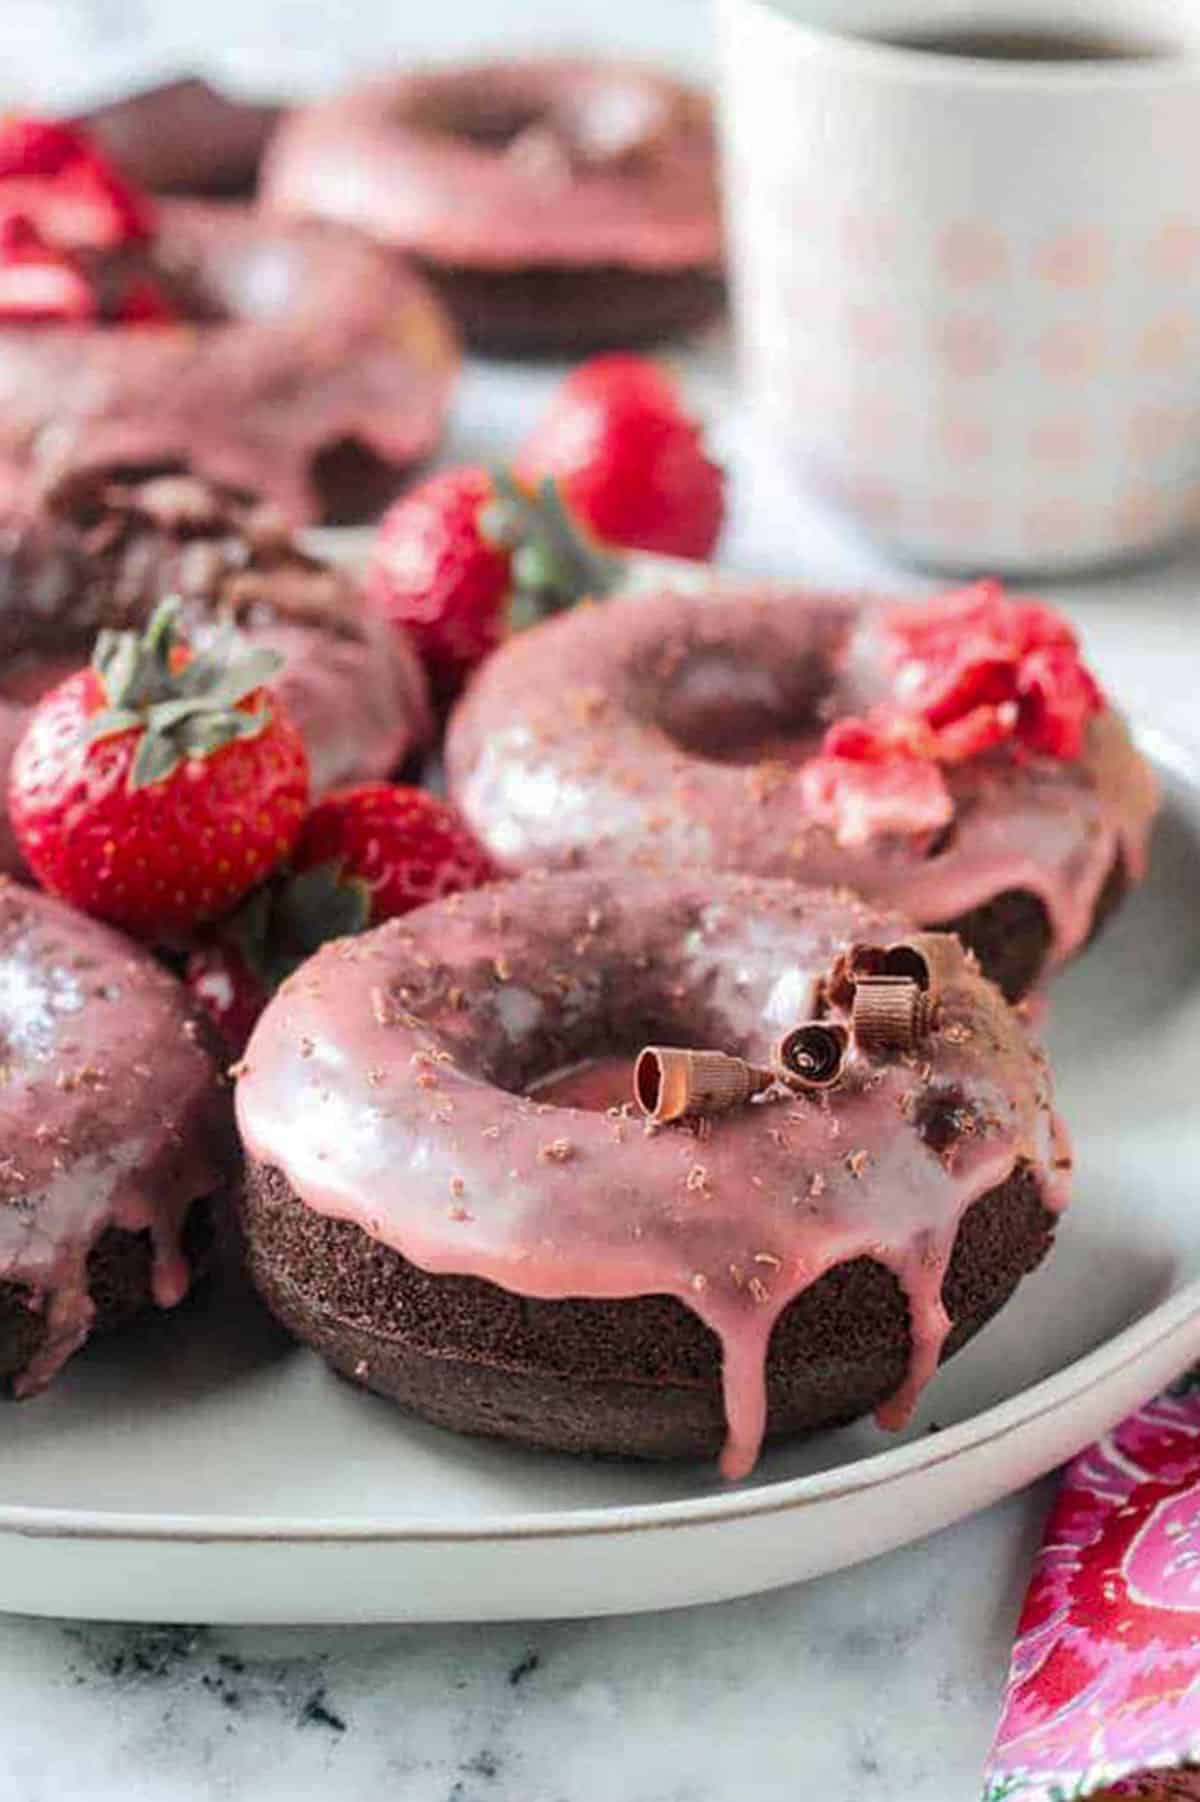 Close up of drippy strawberry glaze on a chocolate donut.